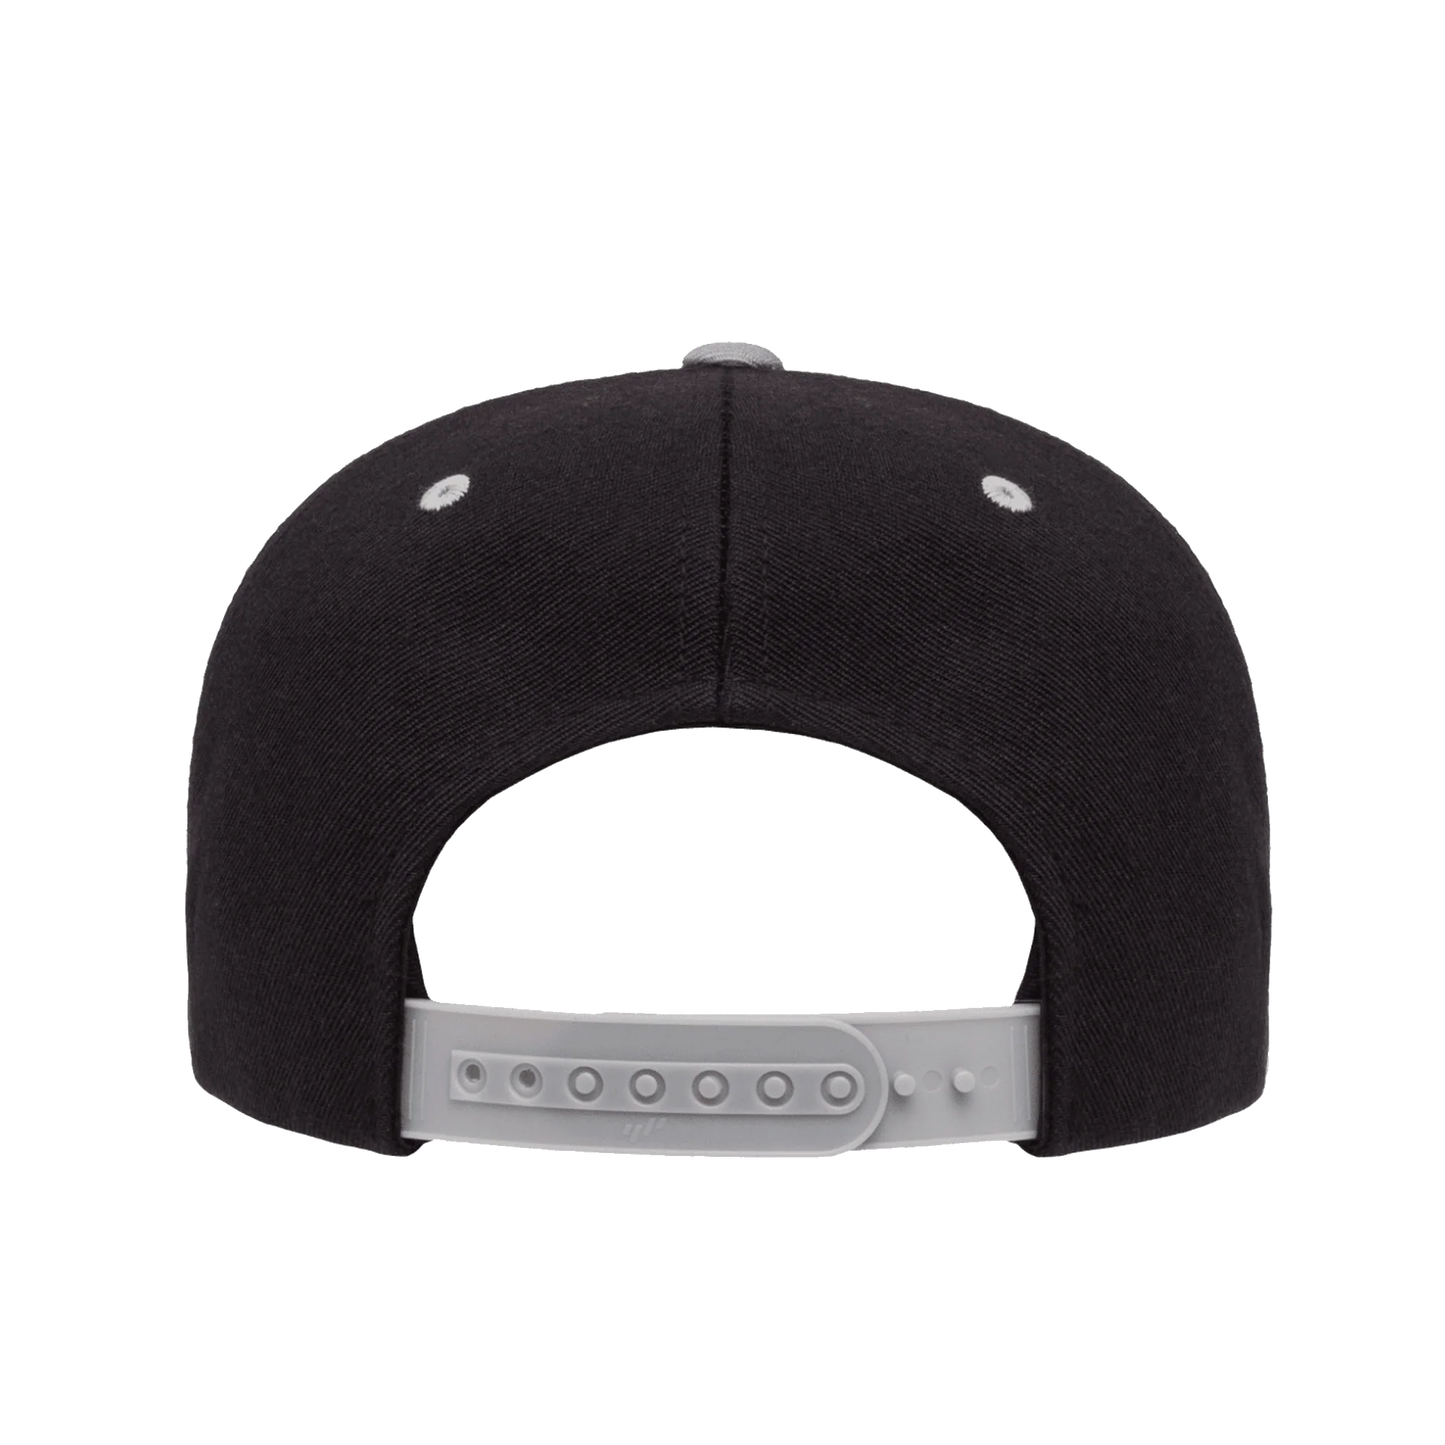 Make The Cut Snapback Hat Black/Grey